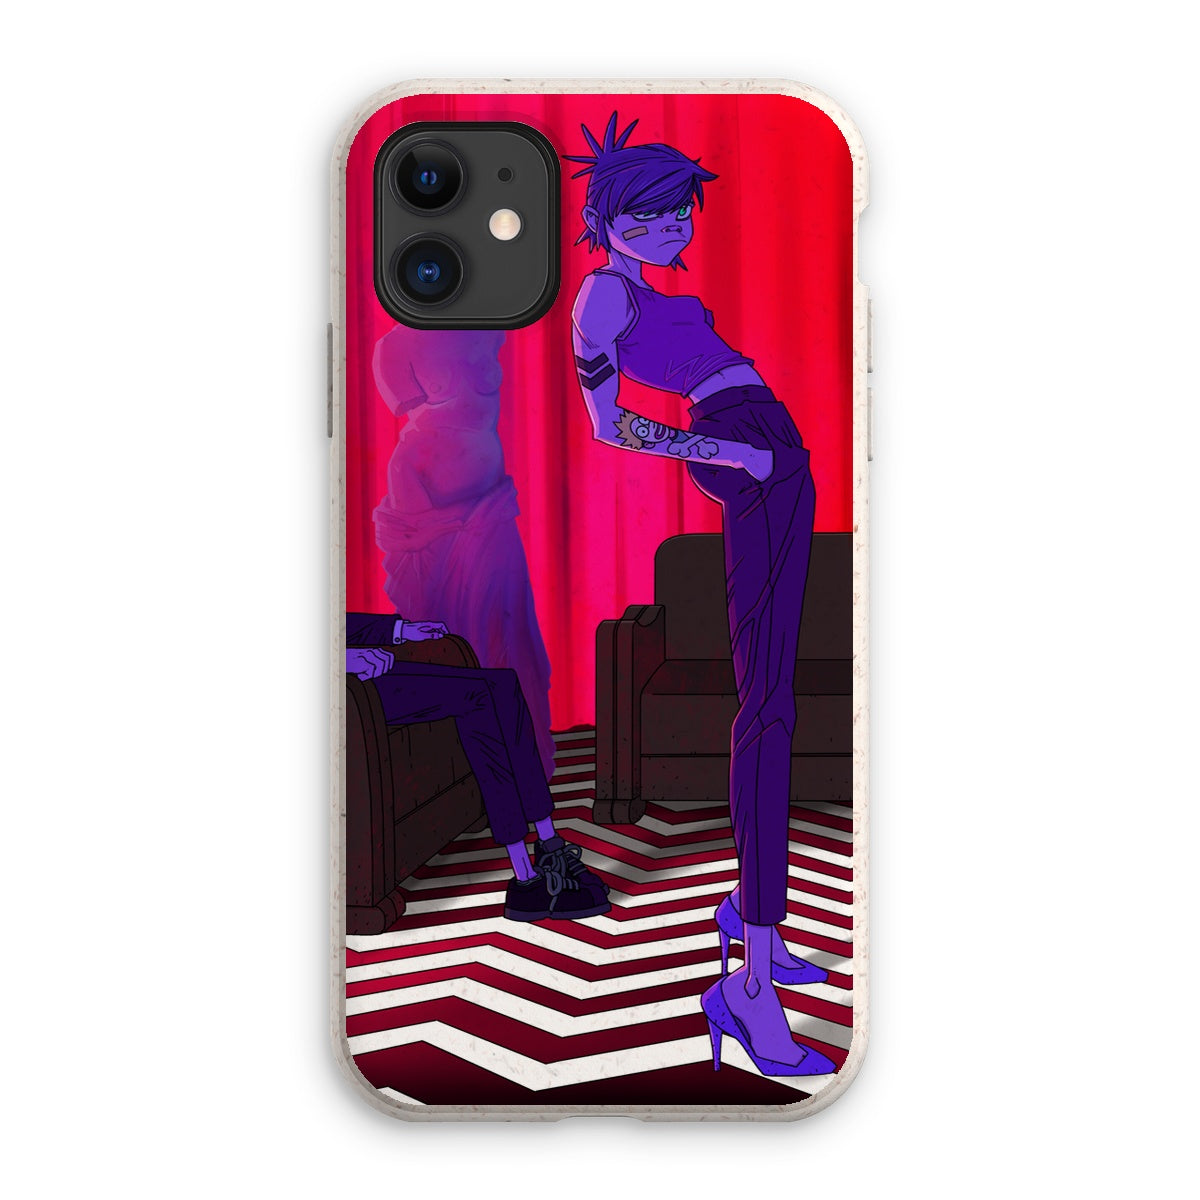 Unique and cool Gorillaz-style phone case illustration